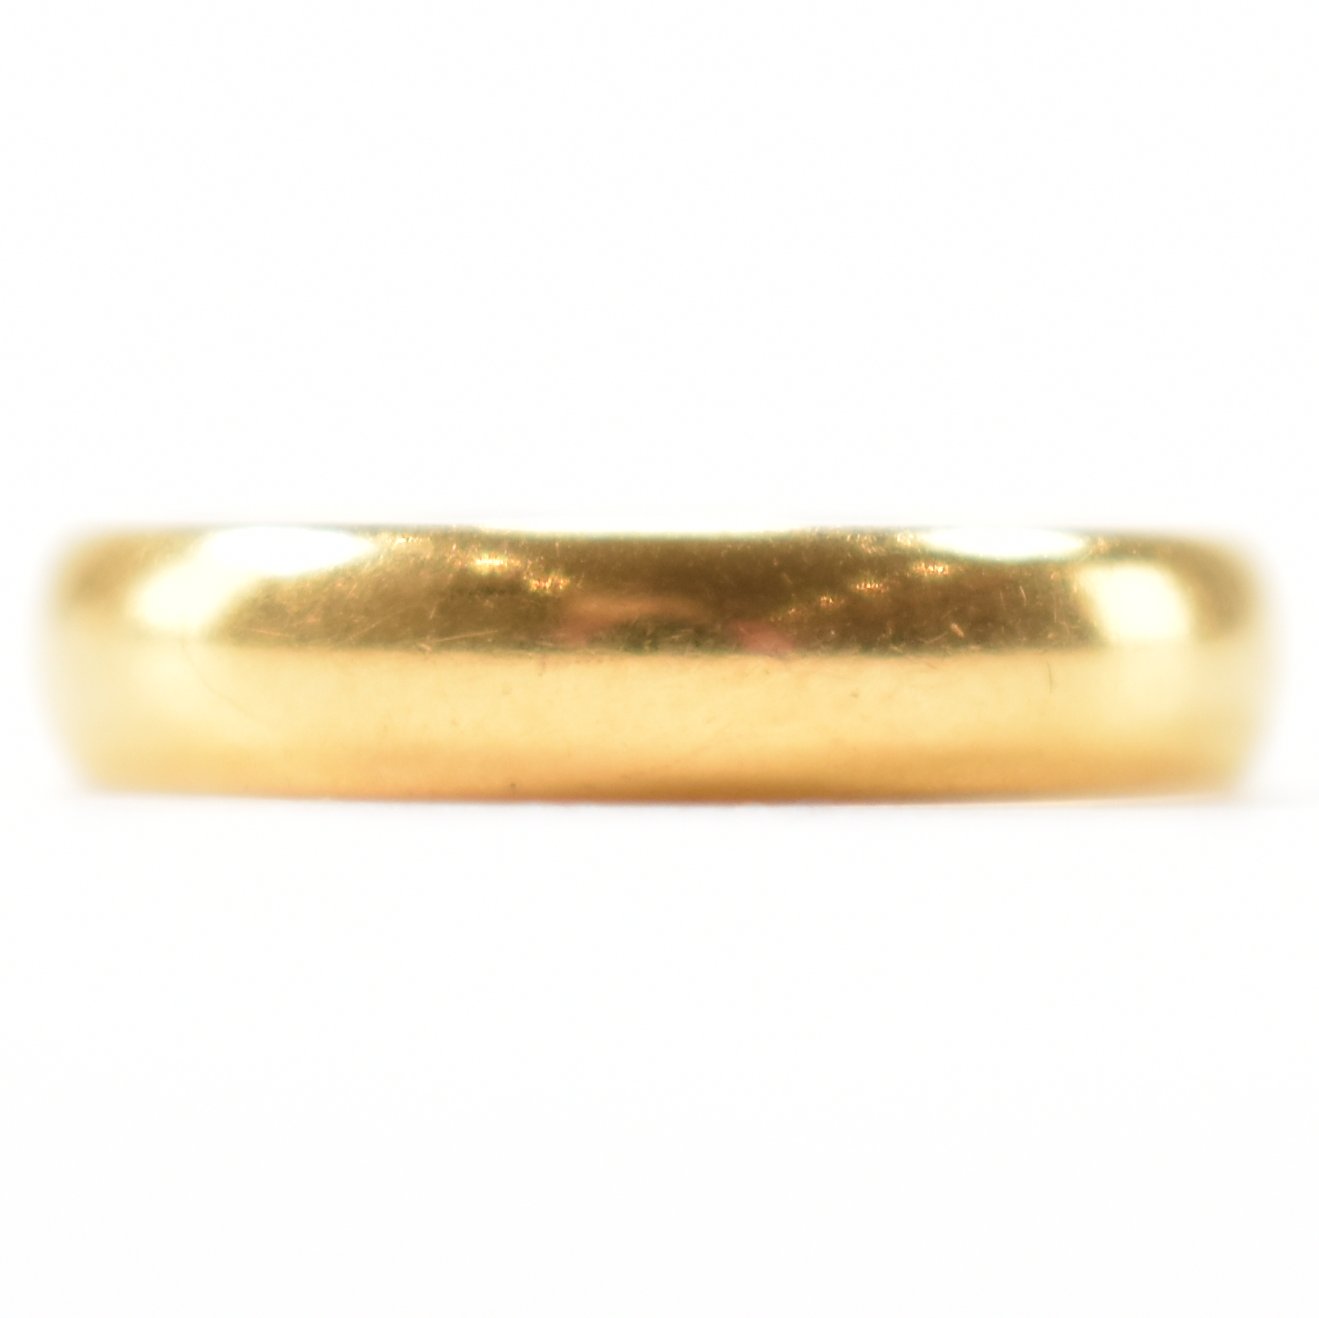 HALLMARKED 22CT GOLD WEDDING BAND RING - Image 2 of 6